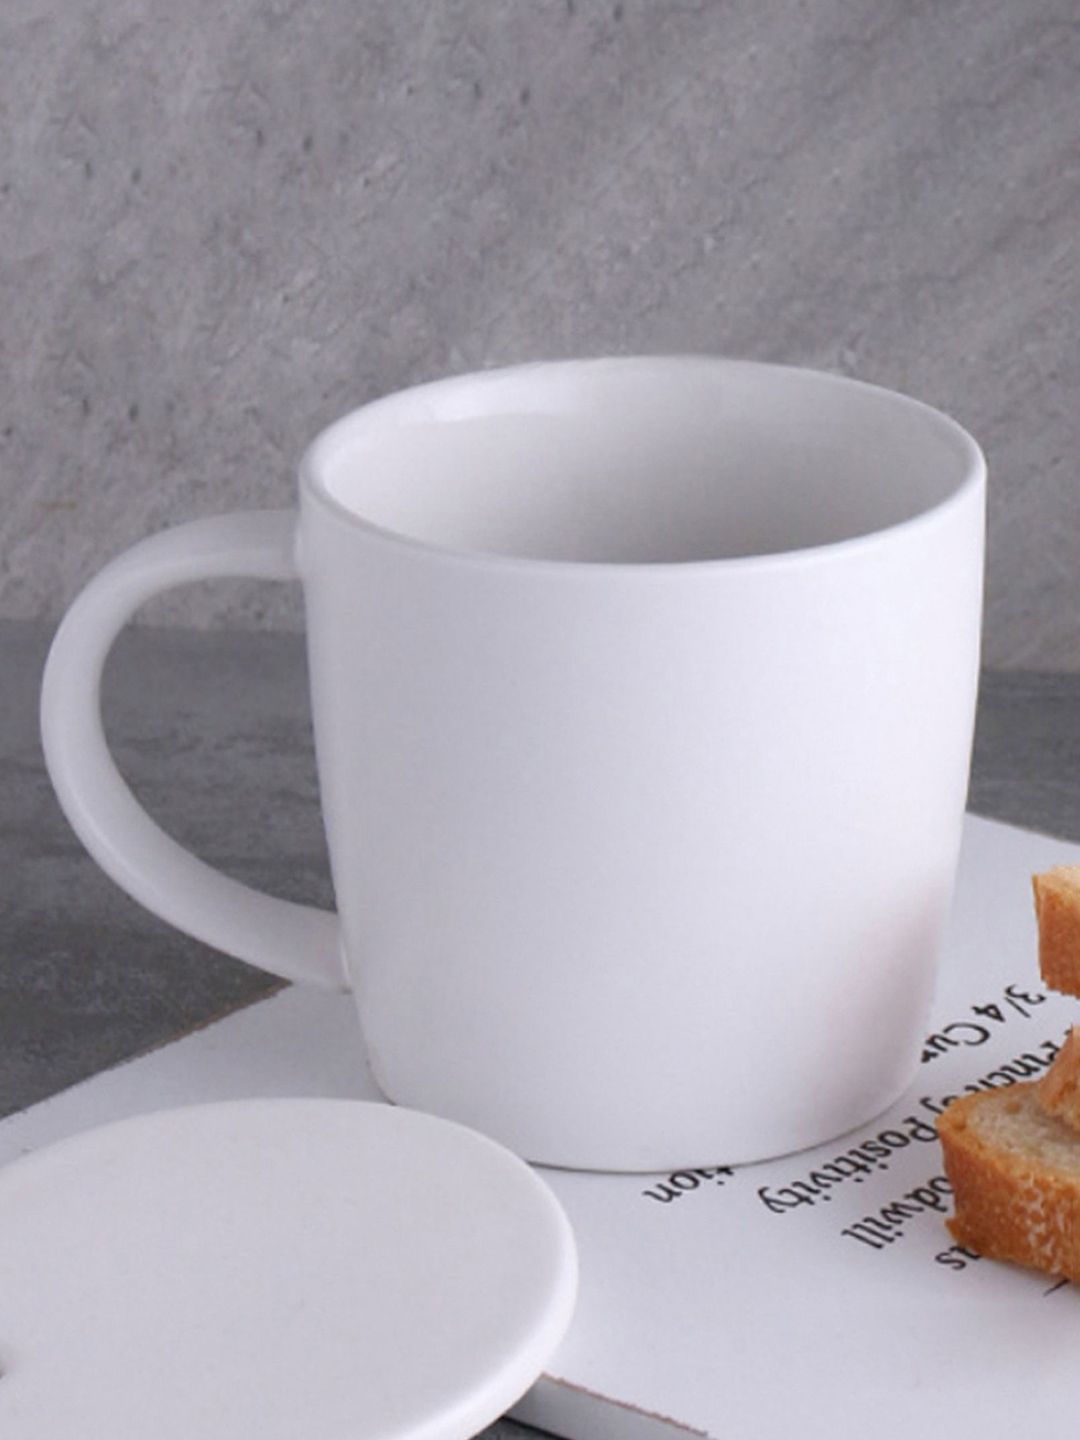 Nestasia White Ceramic Cup With Lid Price in India